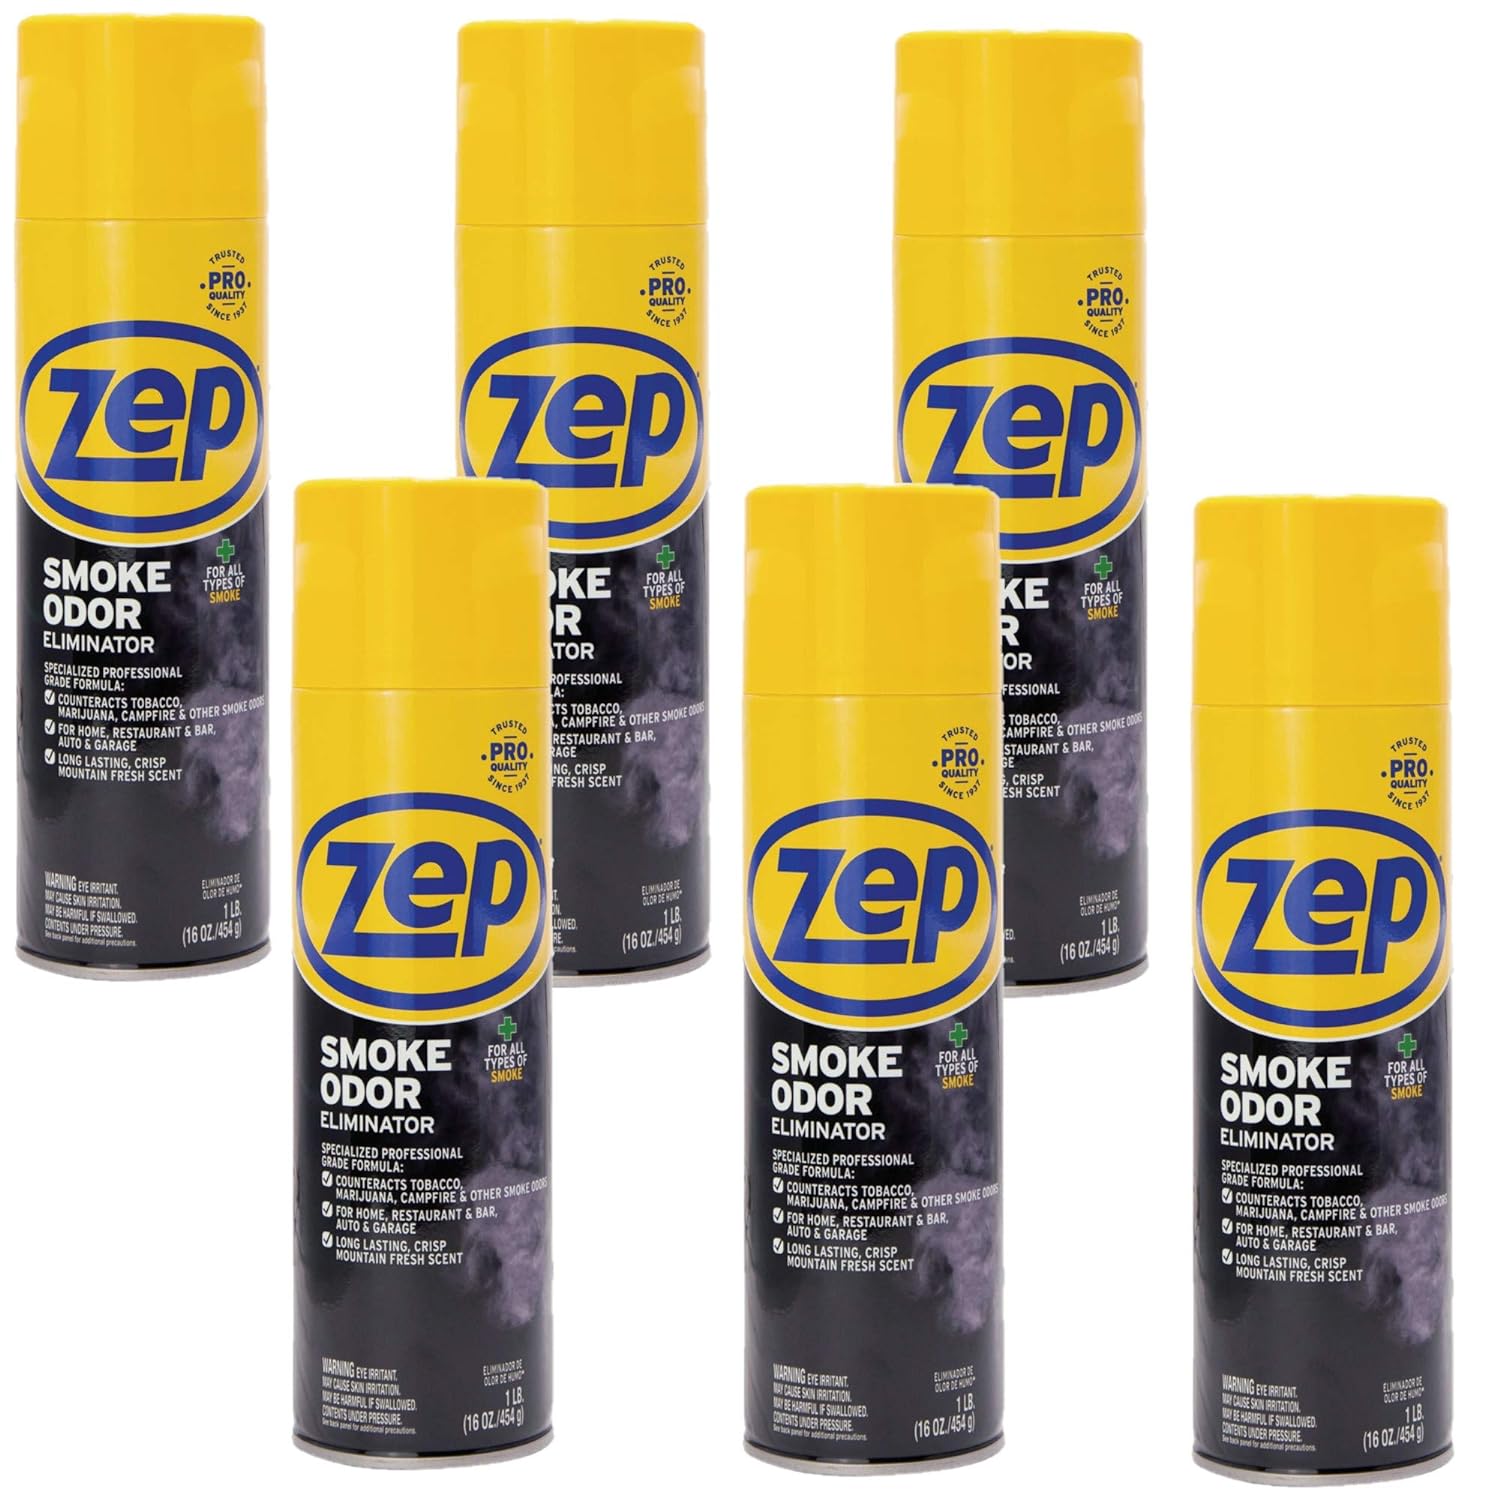 Zep Commercial Smoke Odor Eliminator 16 Ounce - 6-Pack : Health & Household